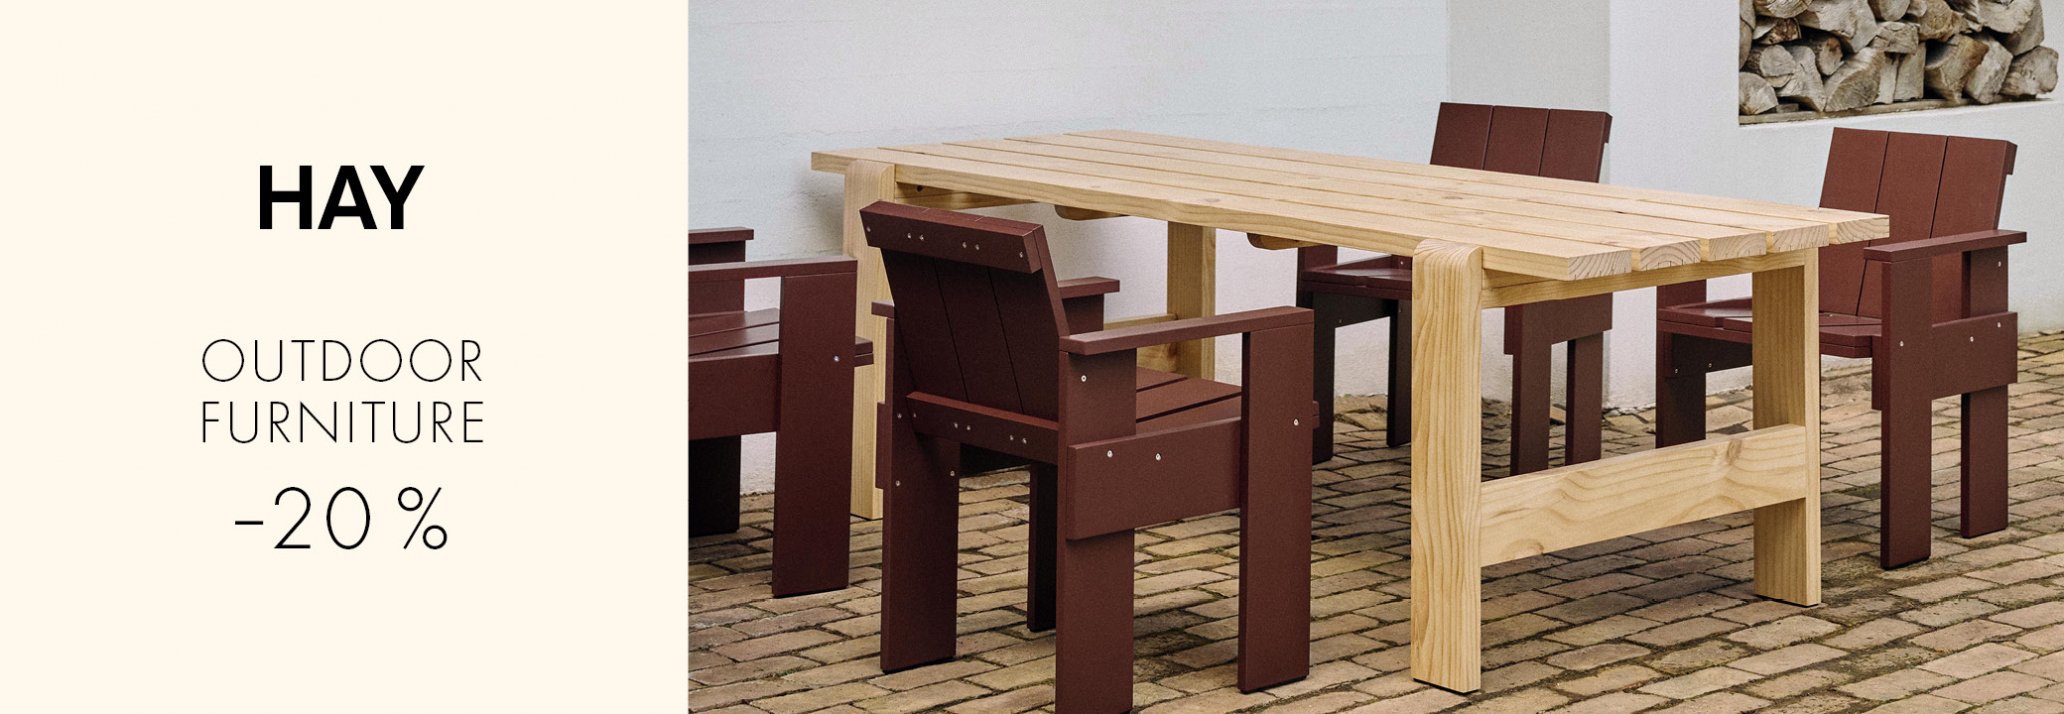 badge Betreffende dozijn Hay outdoor furniture: 20% discount ○ Tables, benches & chairs ○ 2023